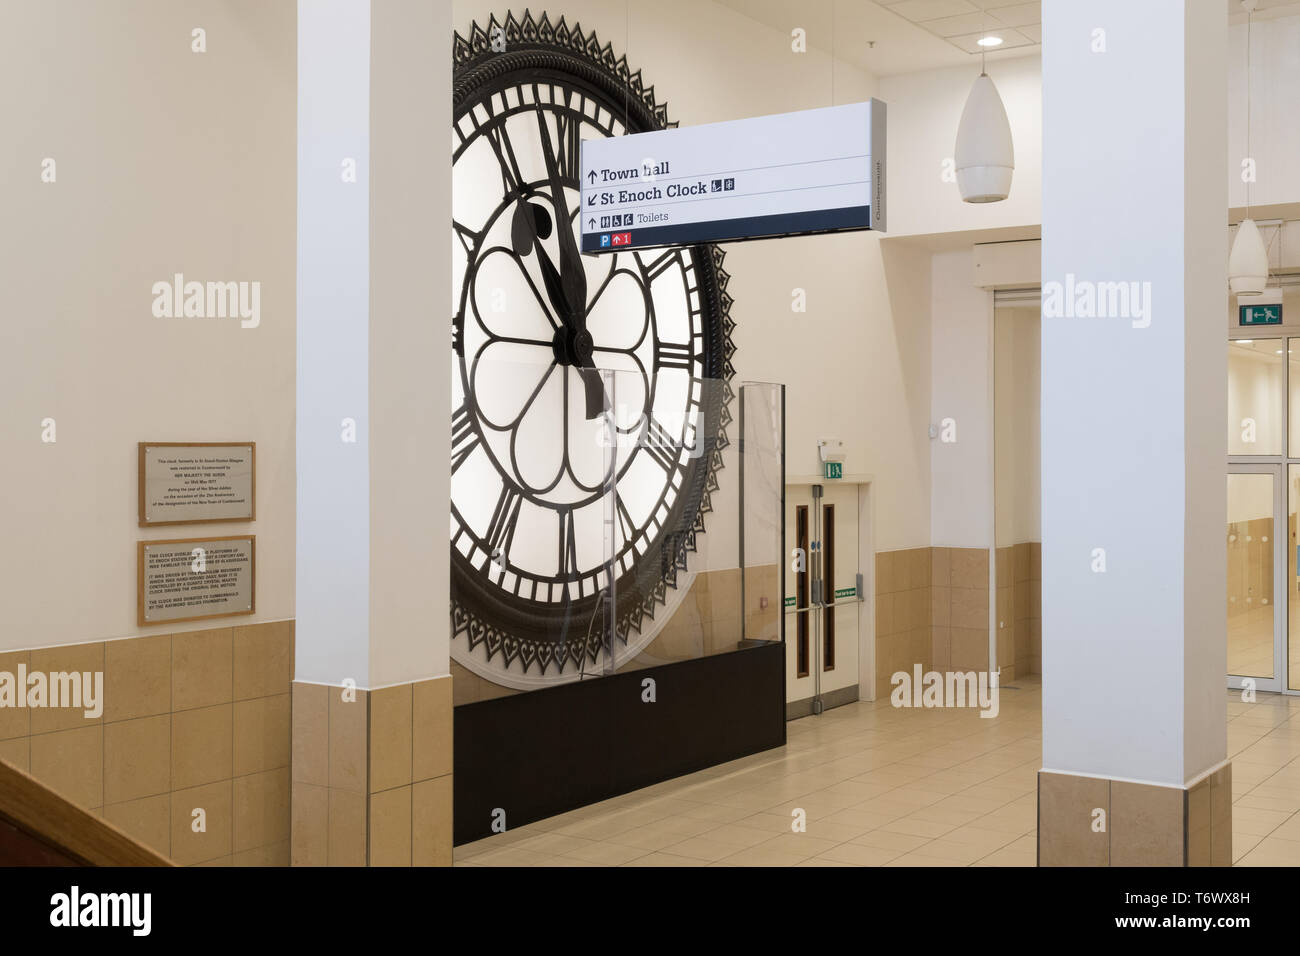 St Enoch Station Clock on display in Cumbernauld Antonine Shopping Centre, North Lanarkshire, Scotland, UK Stock Photo